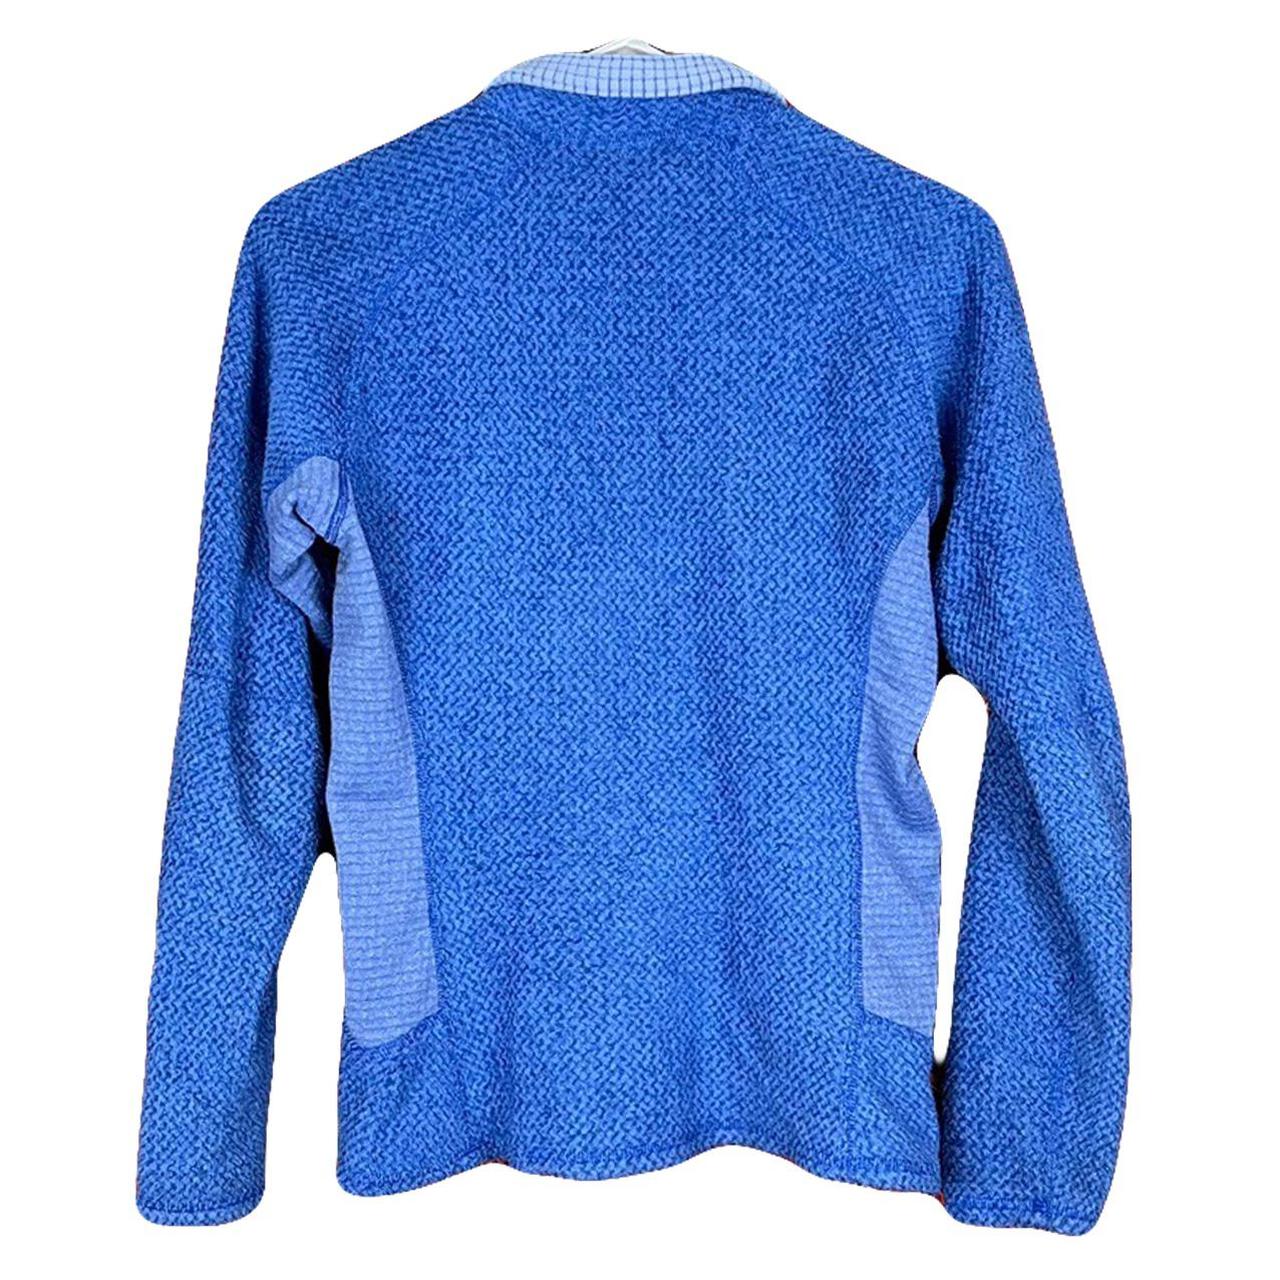 Product Image 2 - Patagonia Blue Fleece Jacket

🌊Free shipping